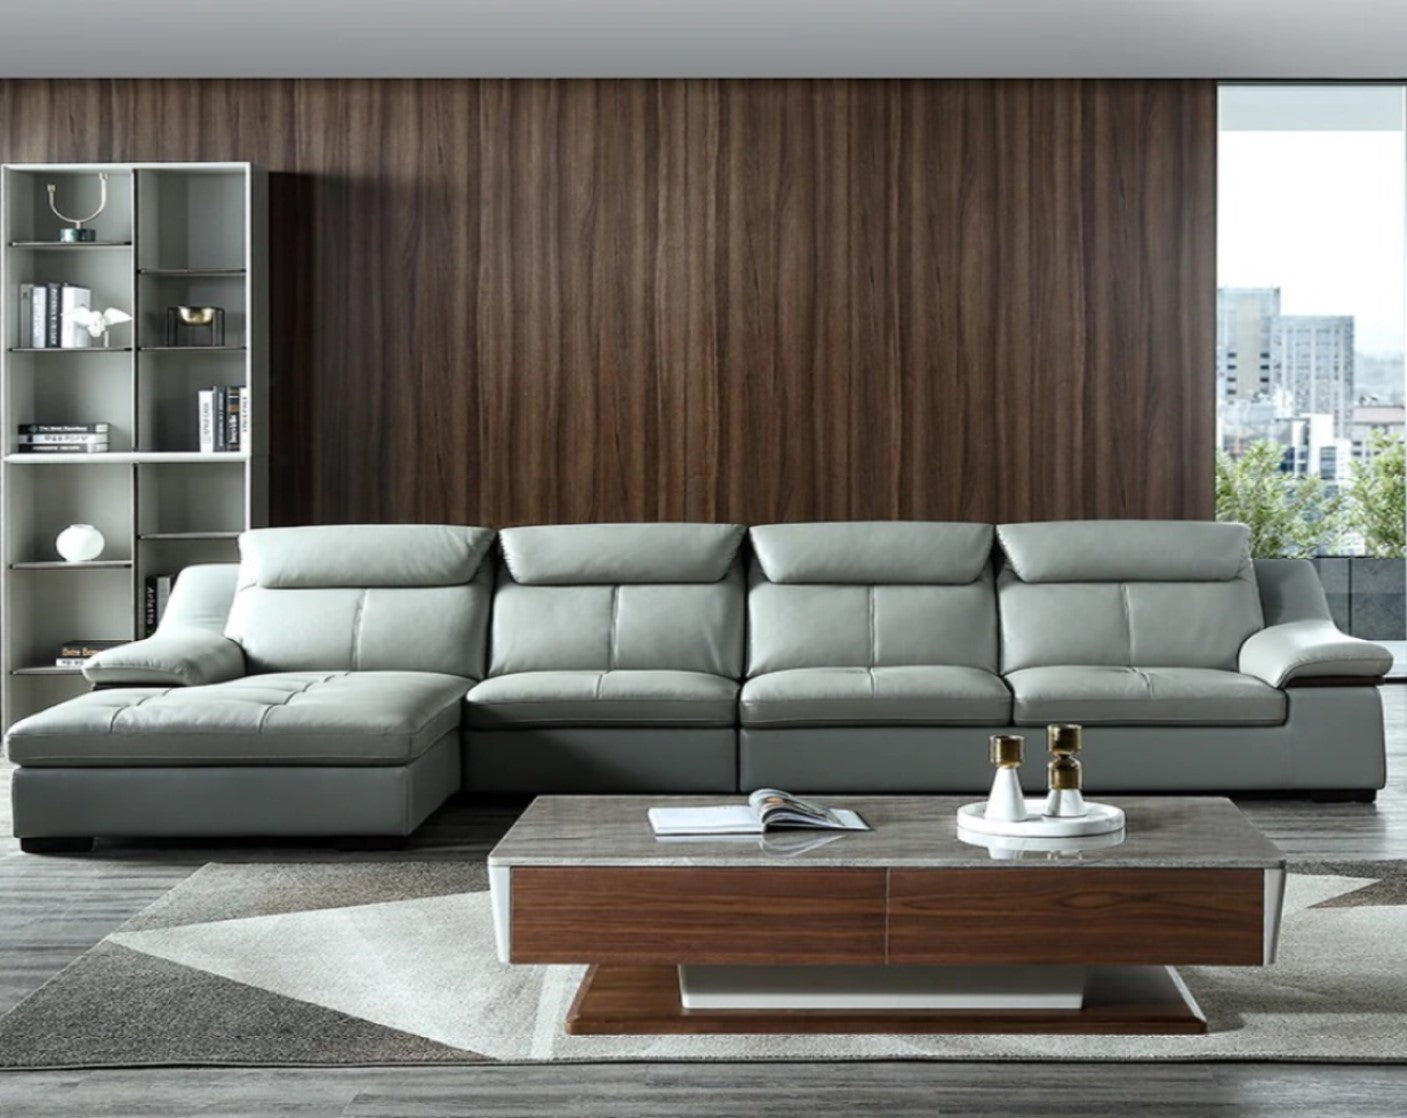 Leather Sofa Design Online In